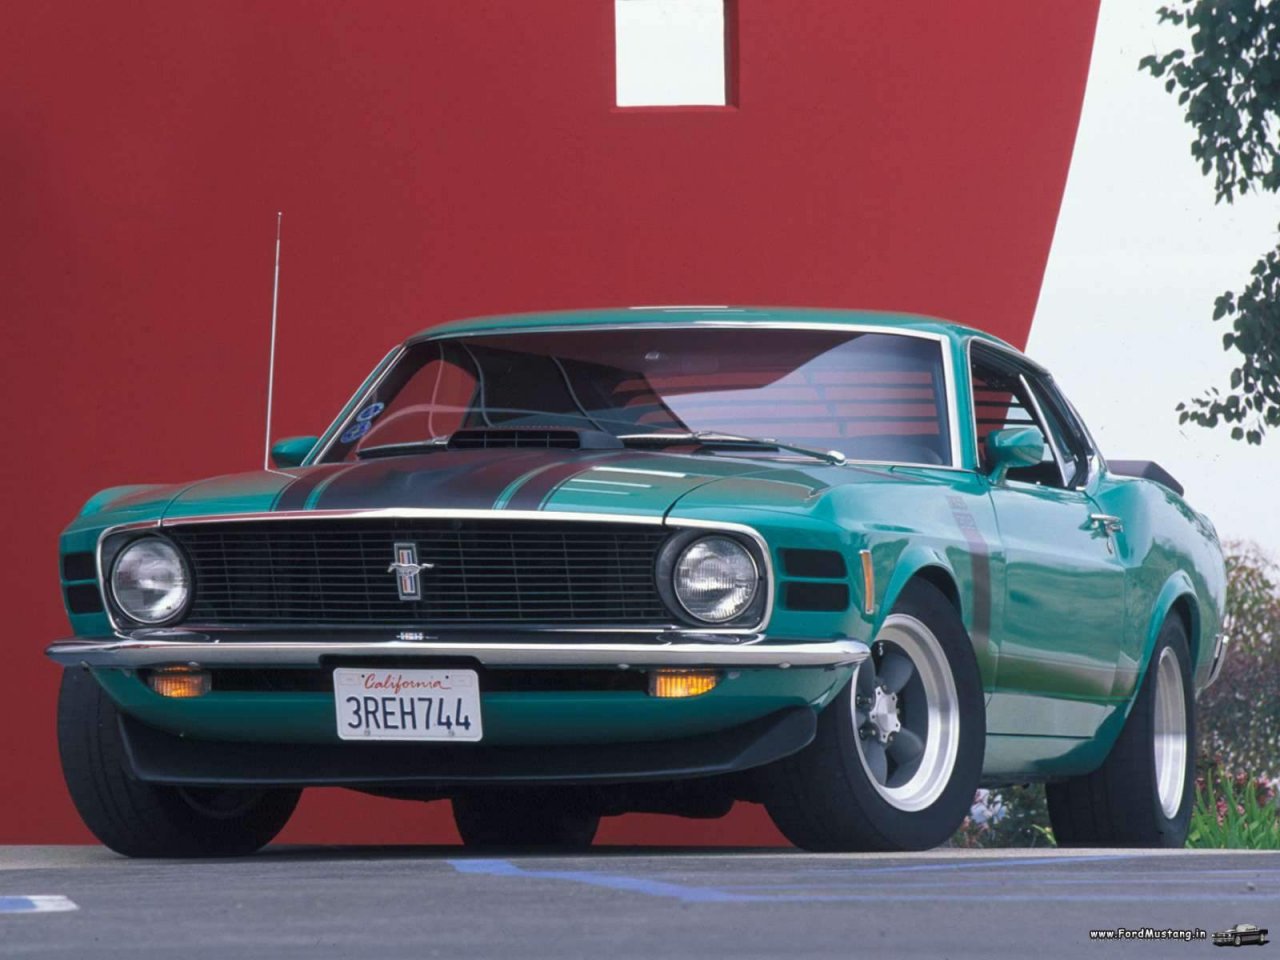 Mustang BOSS 302 quarter mile, times, performance data -